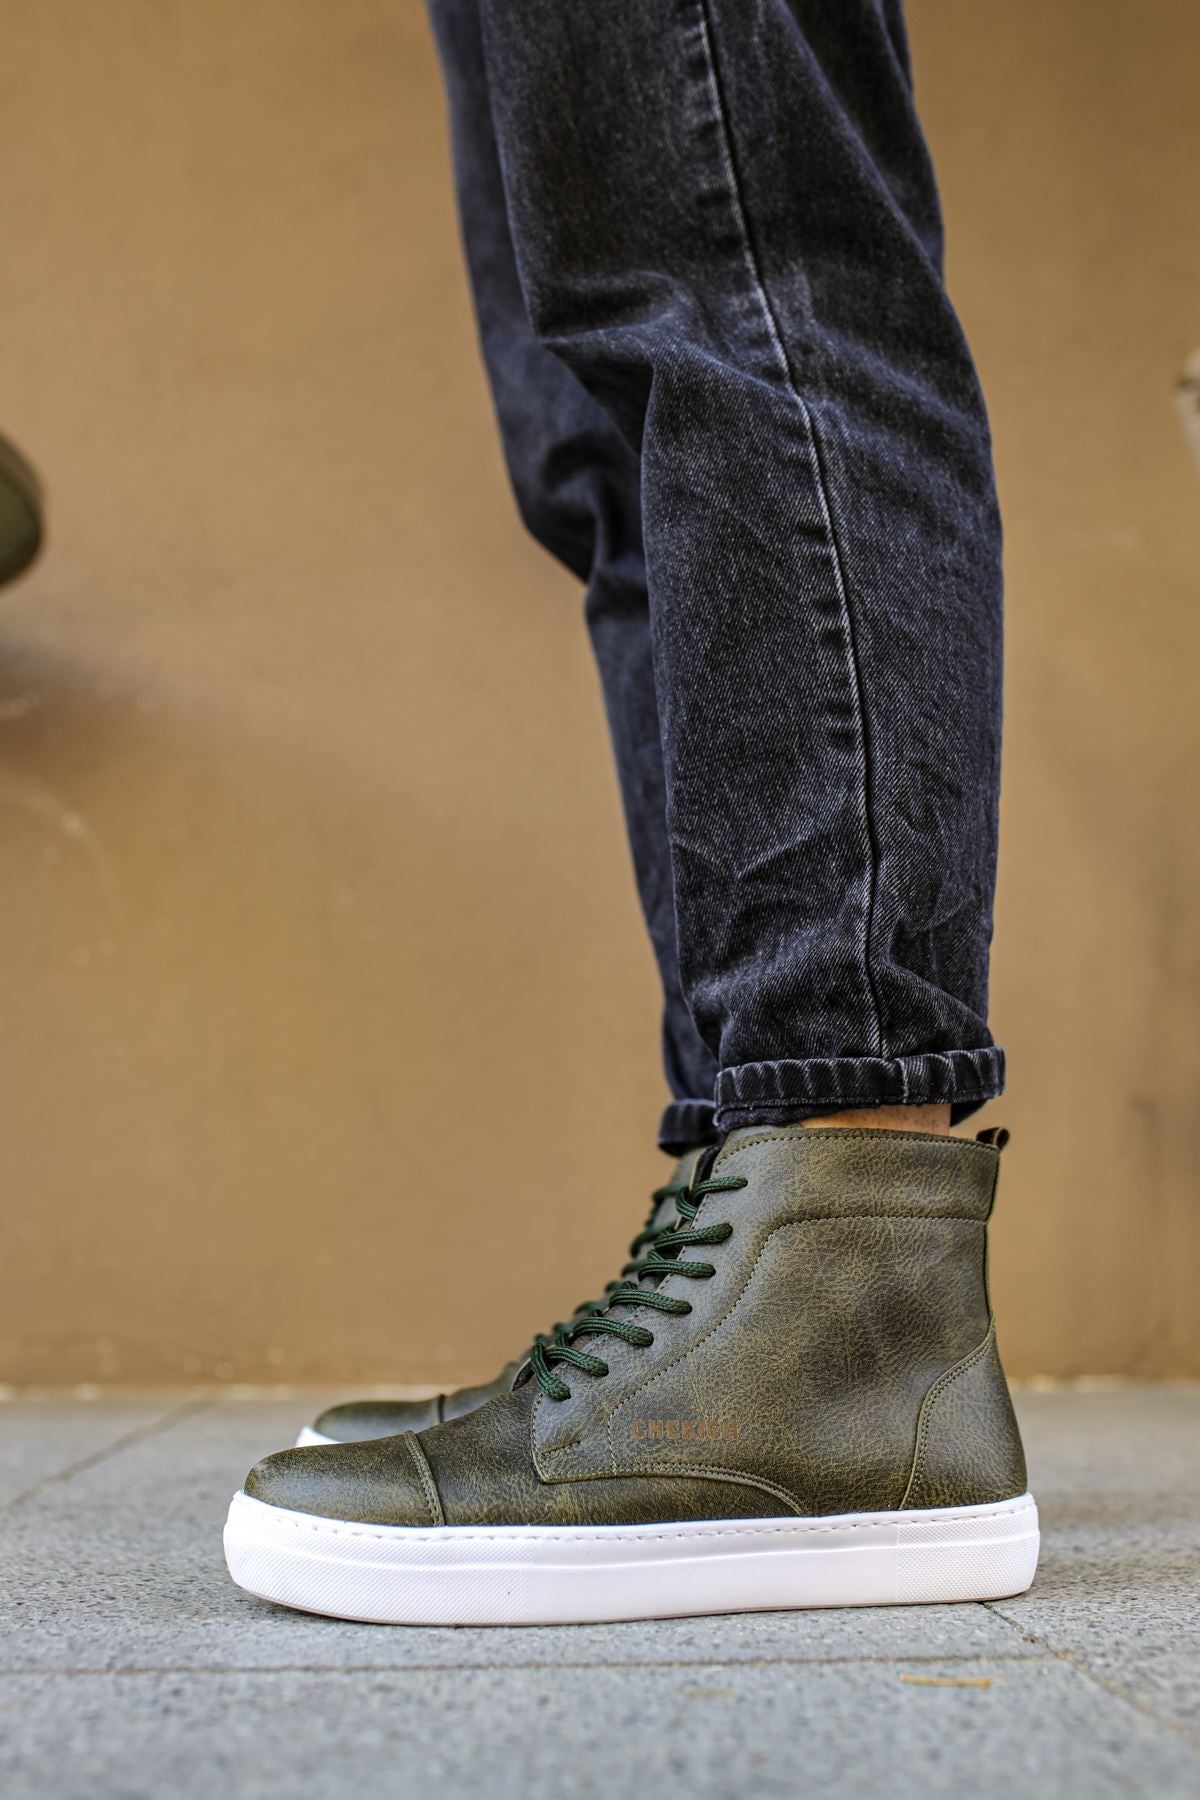 CH029 Men's Khaki Casual Sneaker Boots - STREET MODE ™